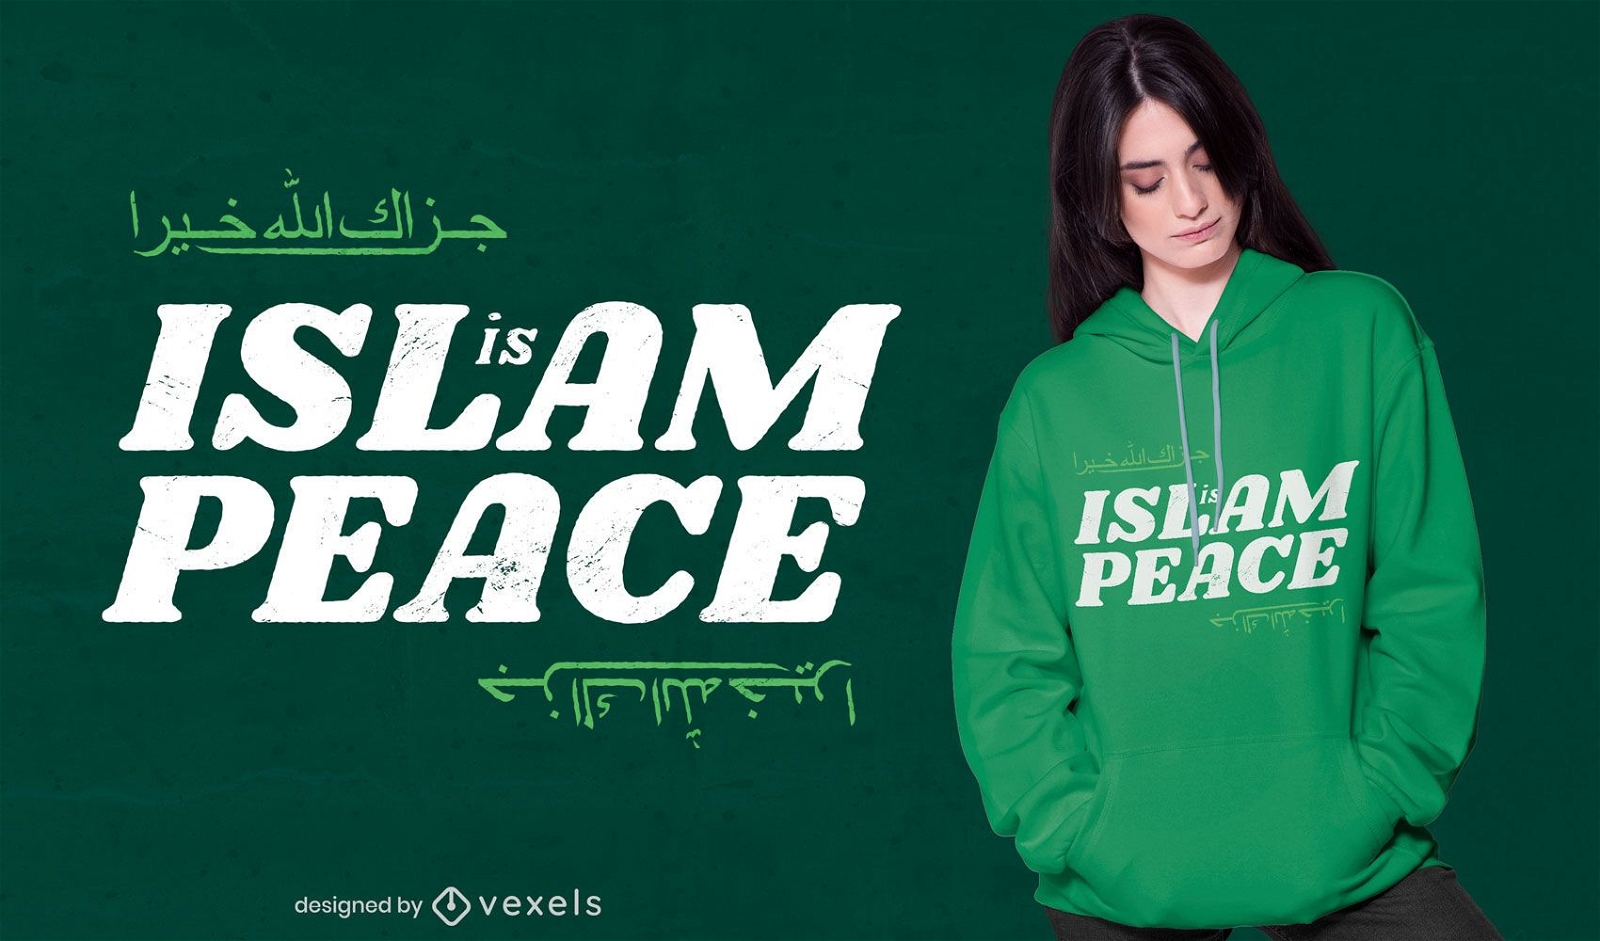 Islam is peace t-shirt design